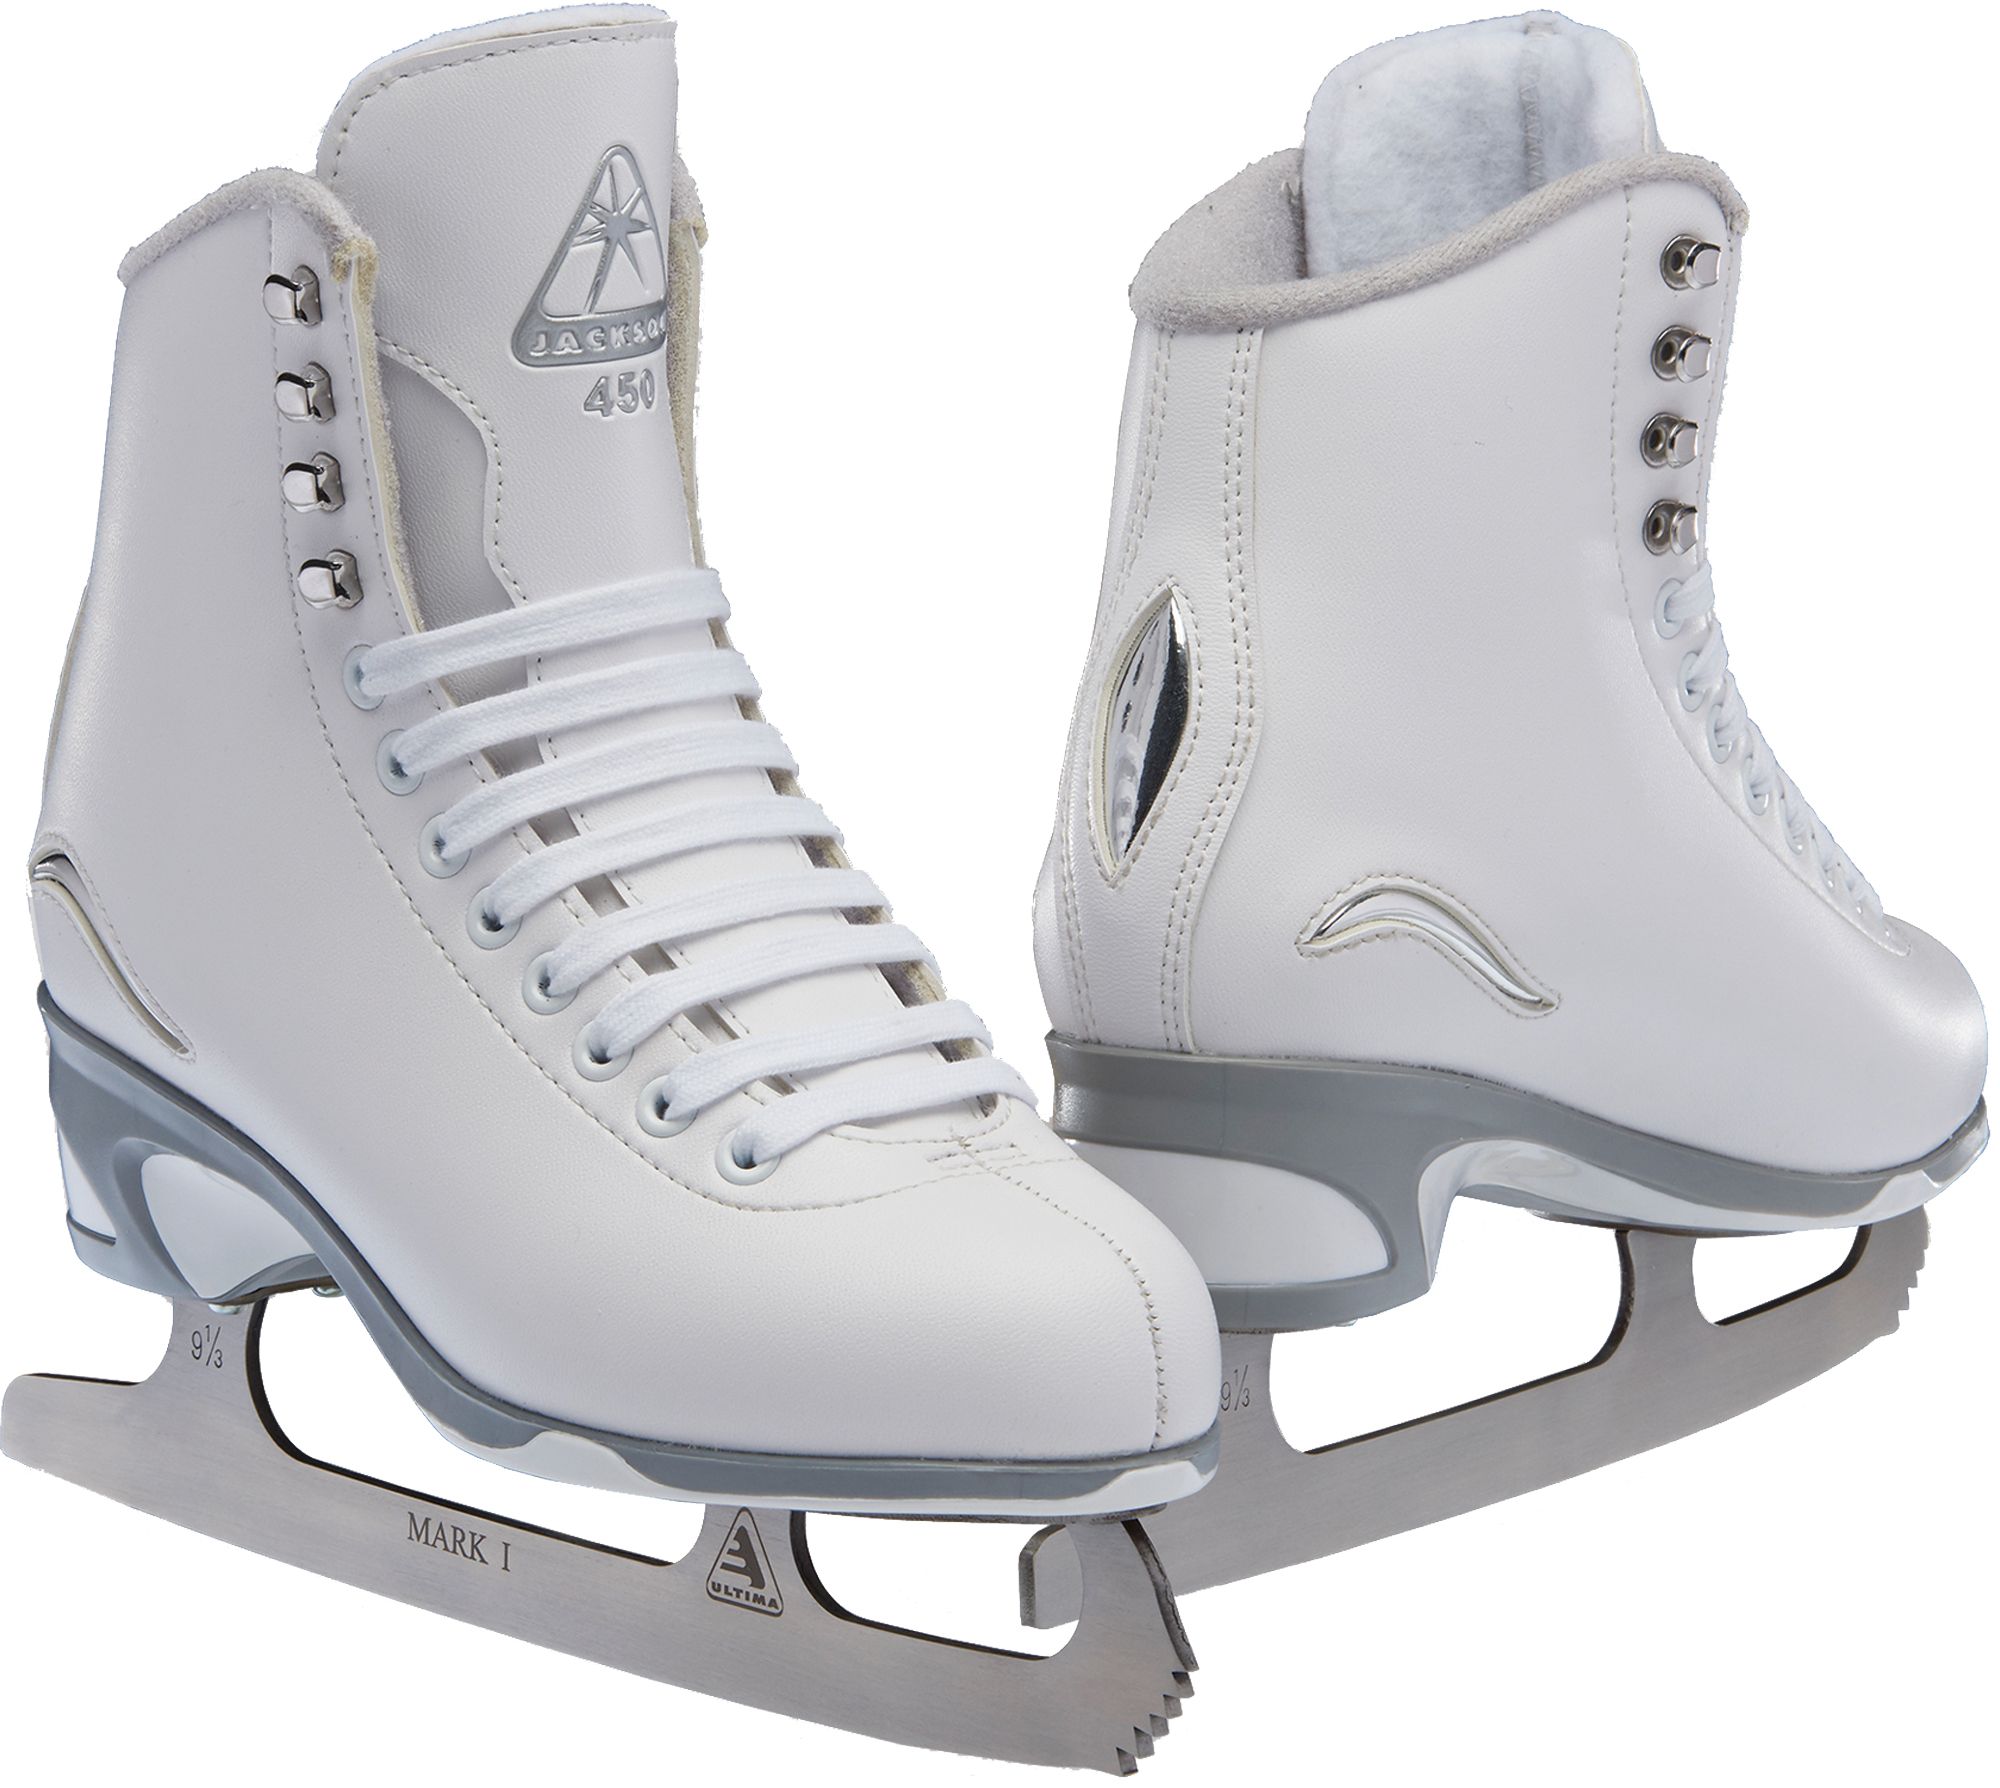 ladies ice skates size 7